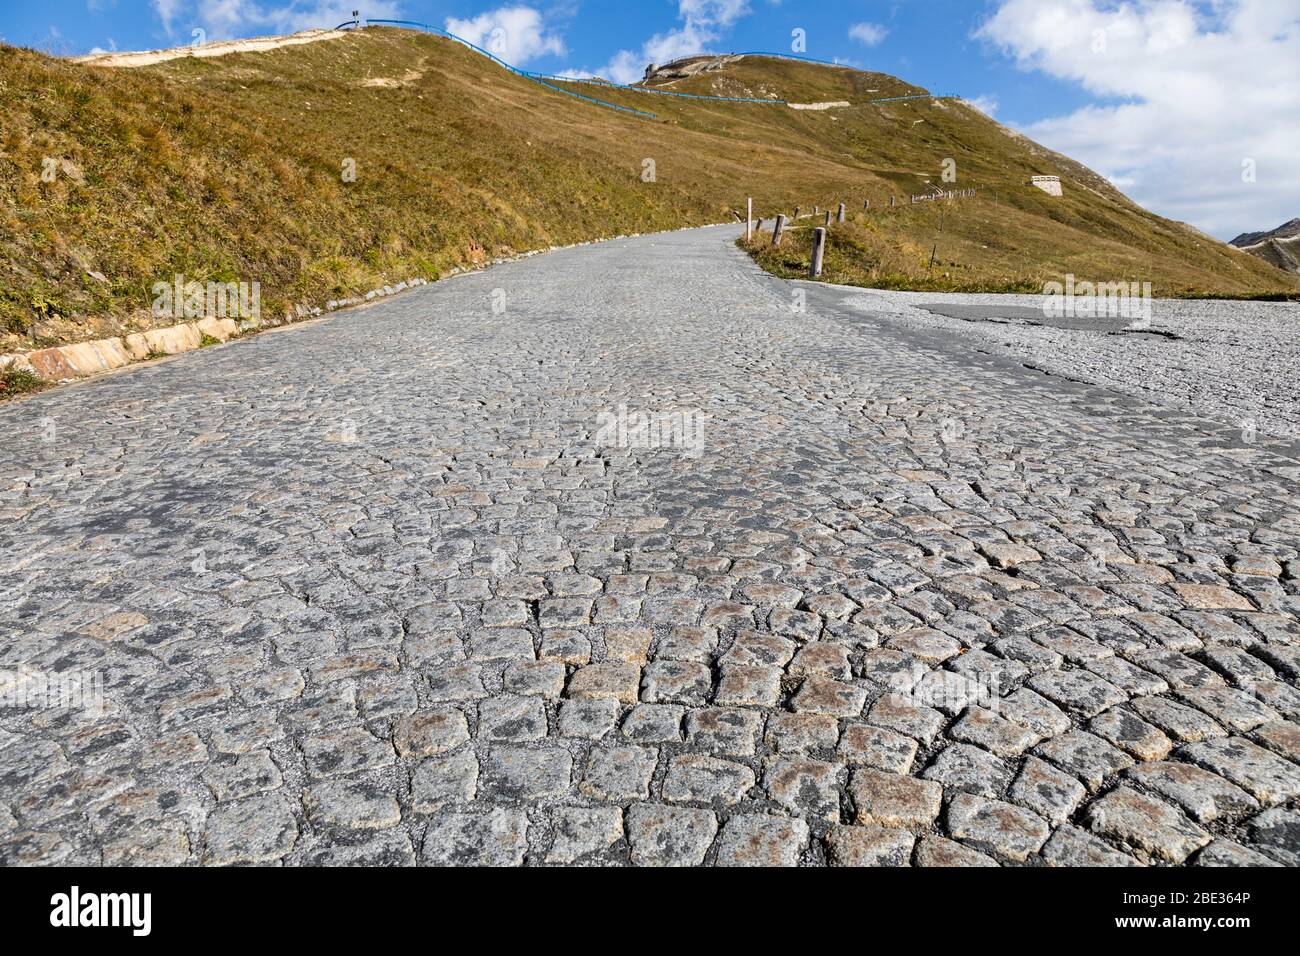 Los setts de granito forman la superficie de la carretera al punto de observación en la cumbre de la carretera Grossglockner High Alpine Road en Austria. Foto de stock